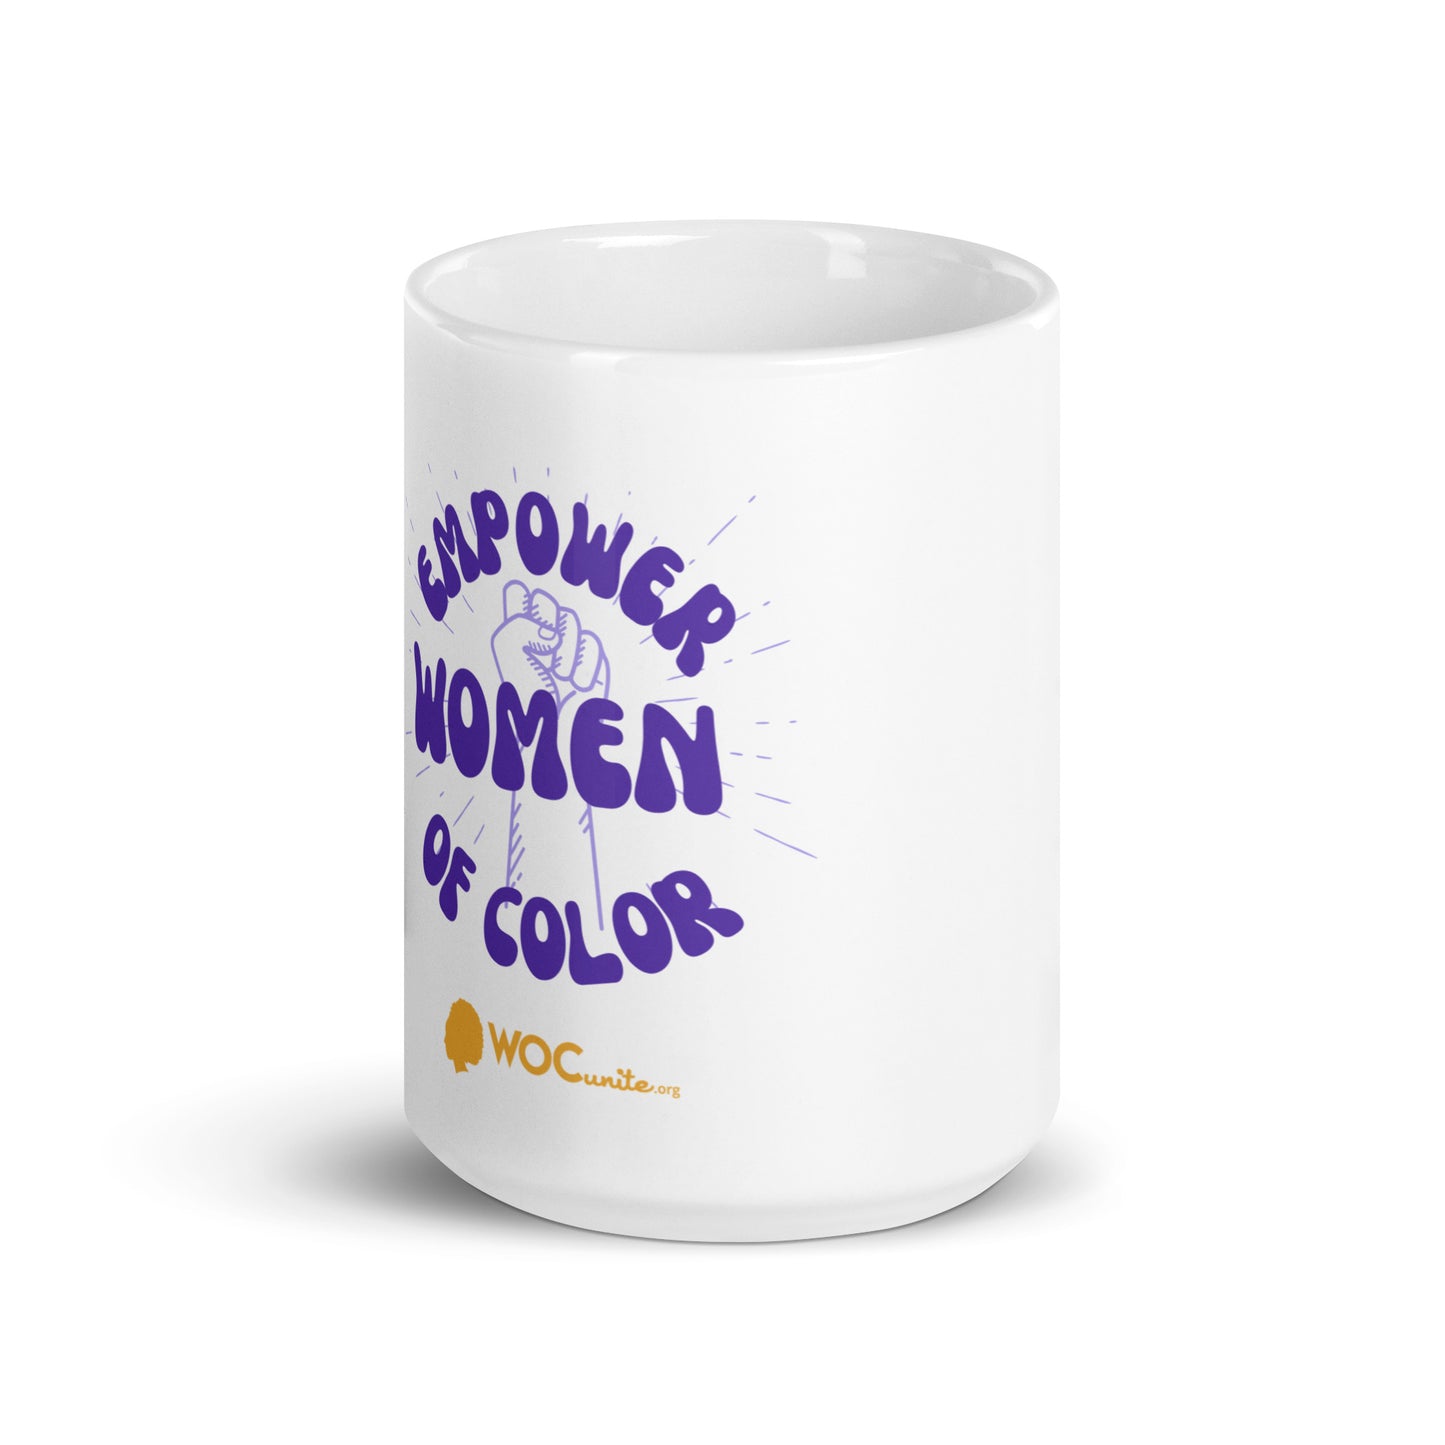 "Empower WOC" White glossy mug